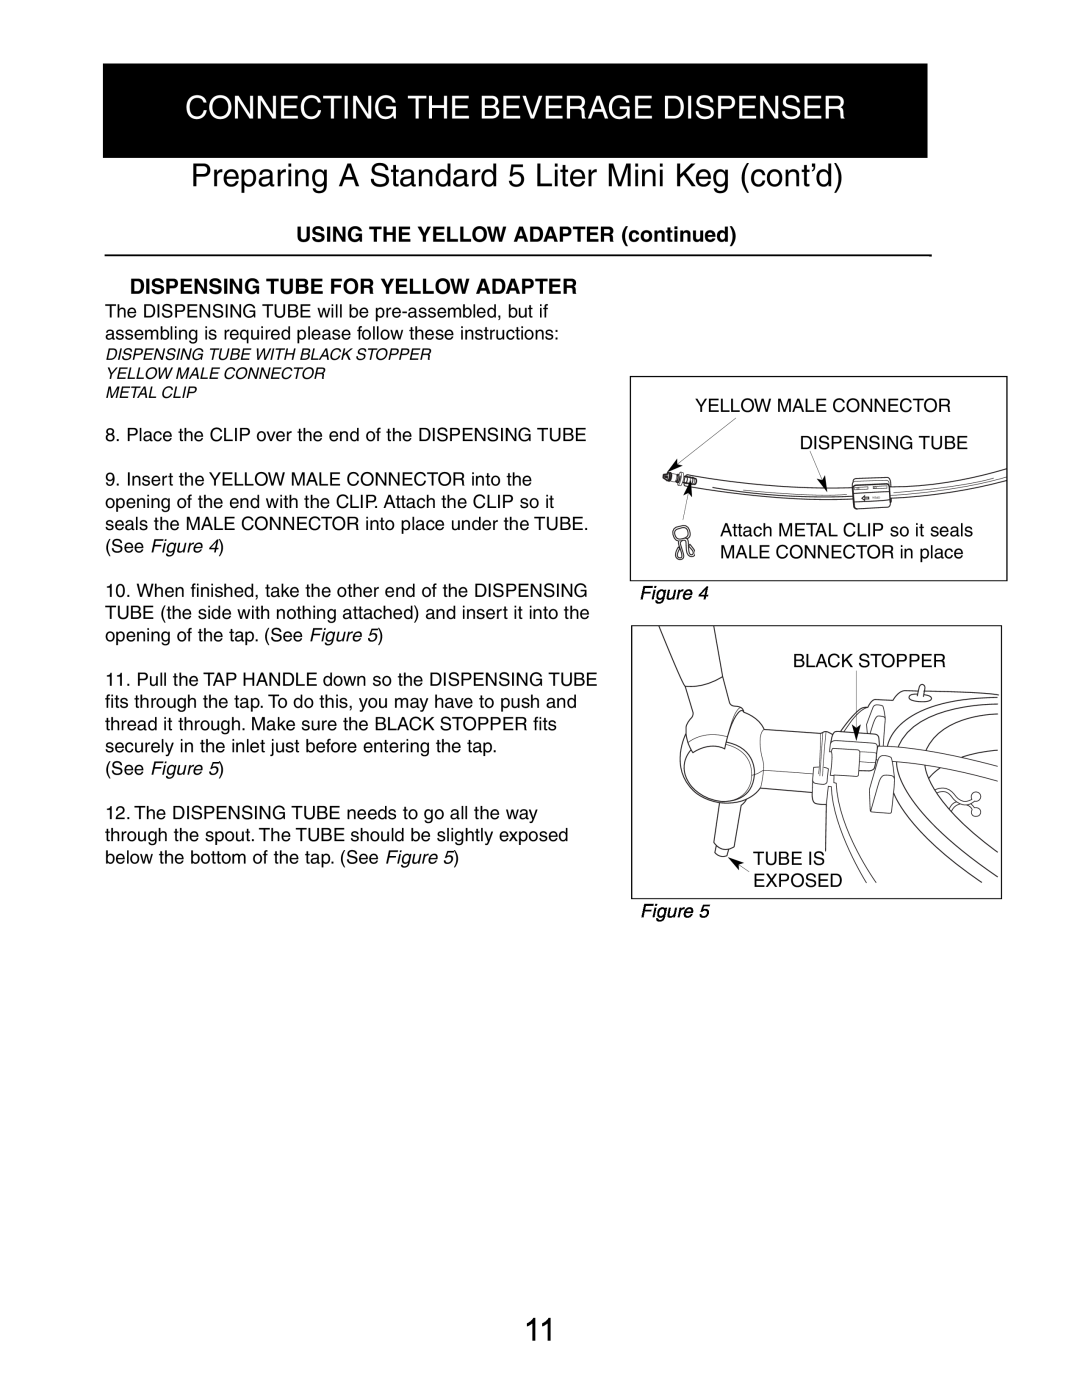 Danby DBD5L owner manual Preparing A Standard 5 Liter Mini Keg cont’d, Connecting The Beverage Dispenser, See Figure 